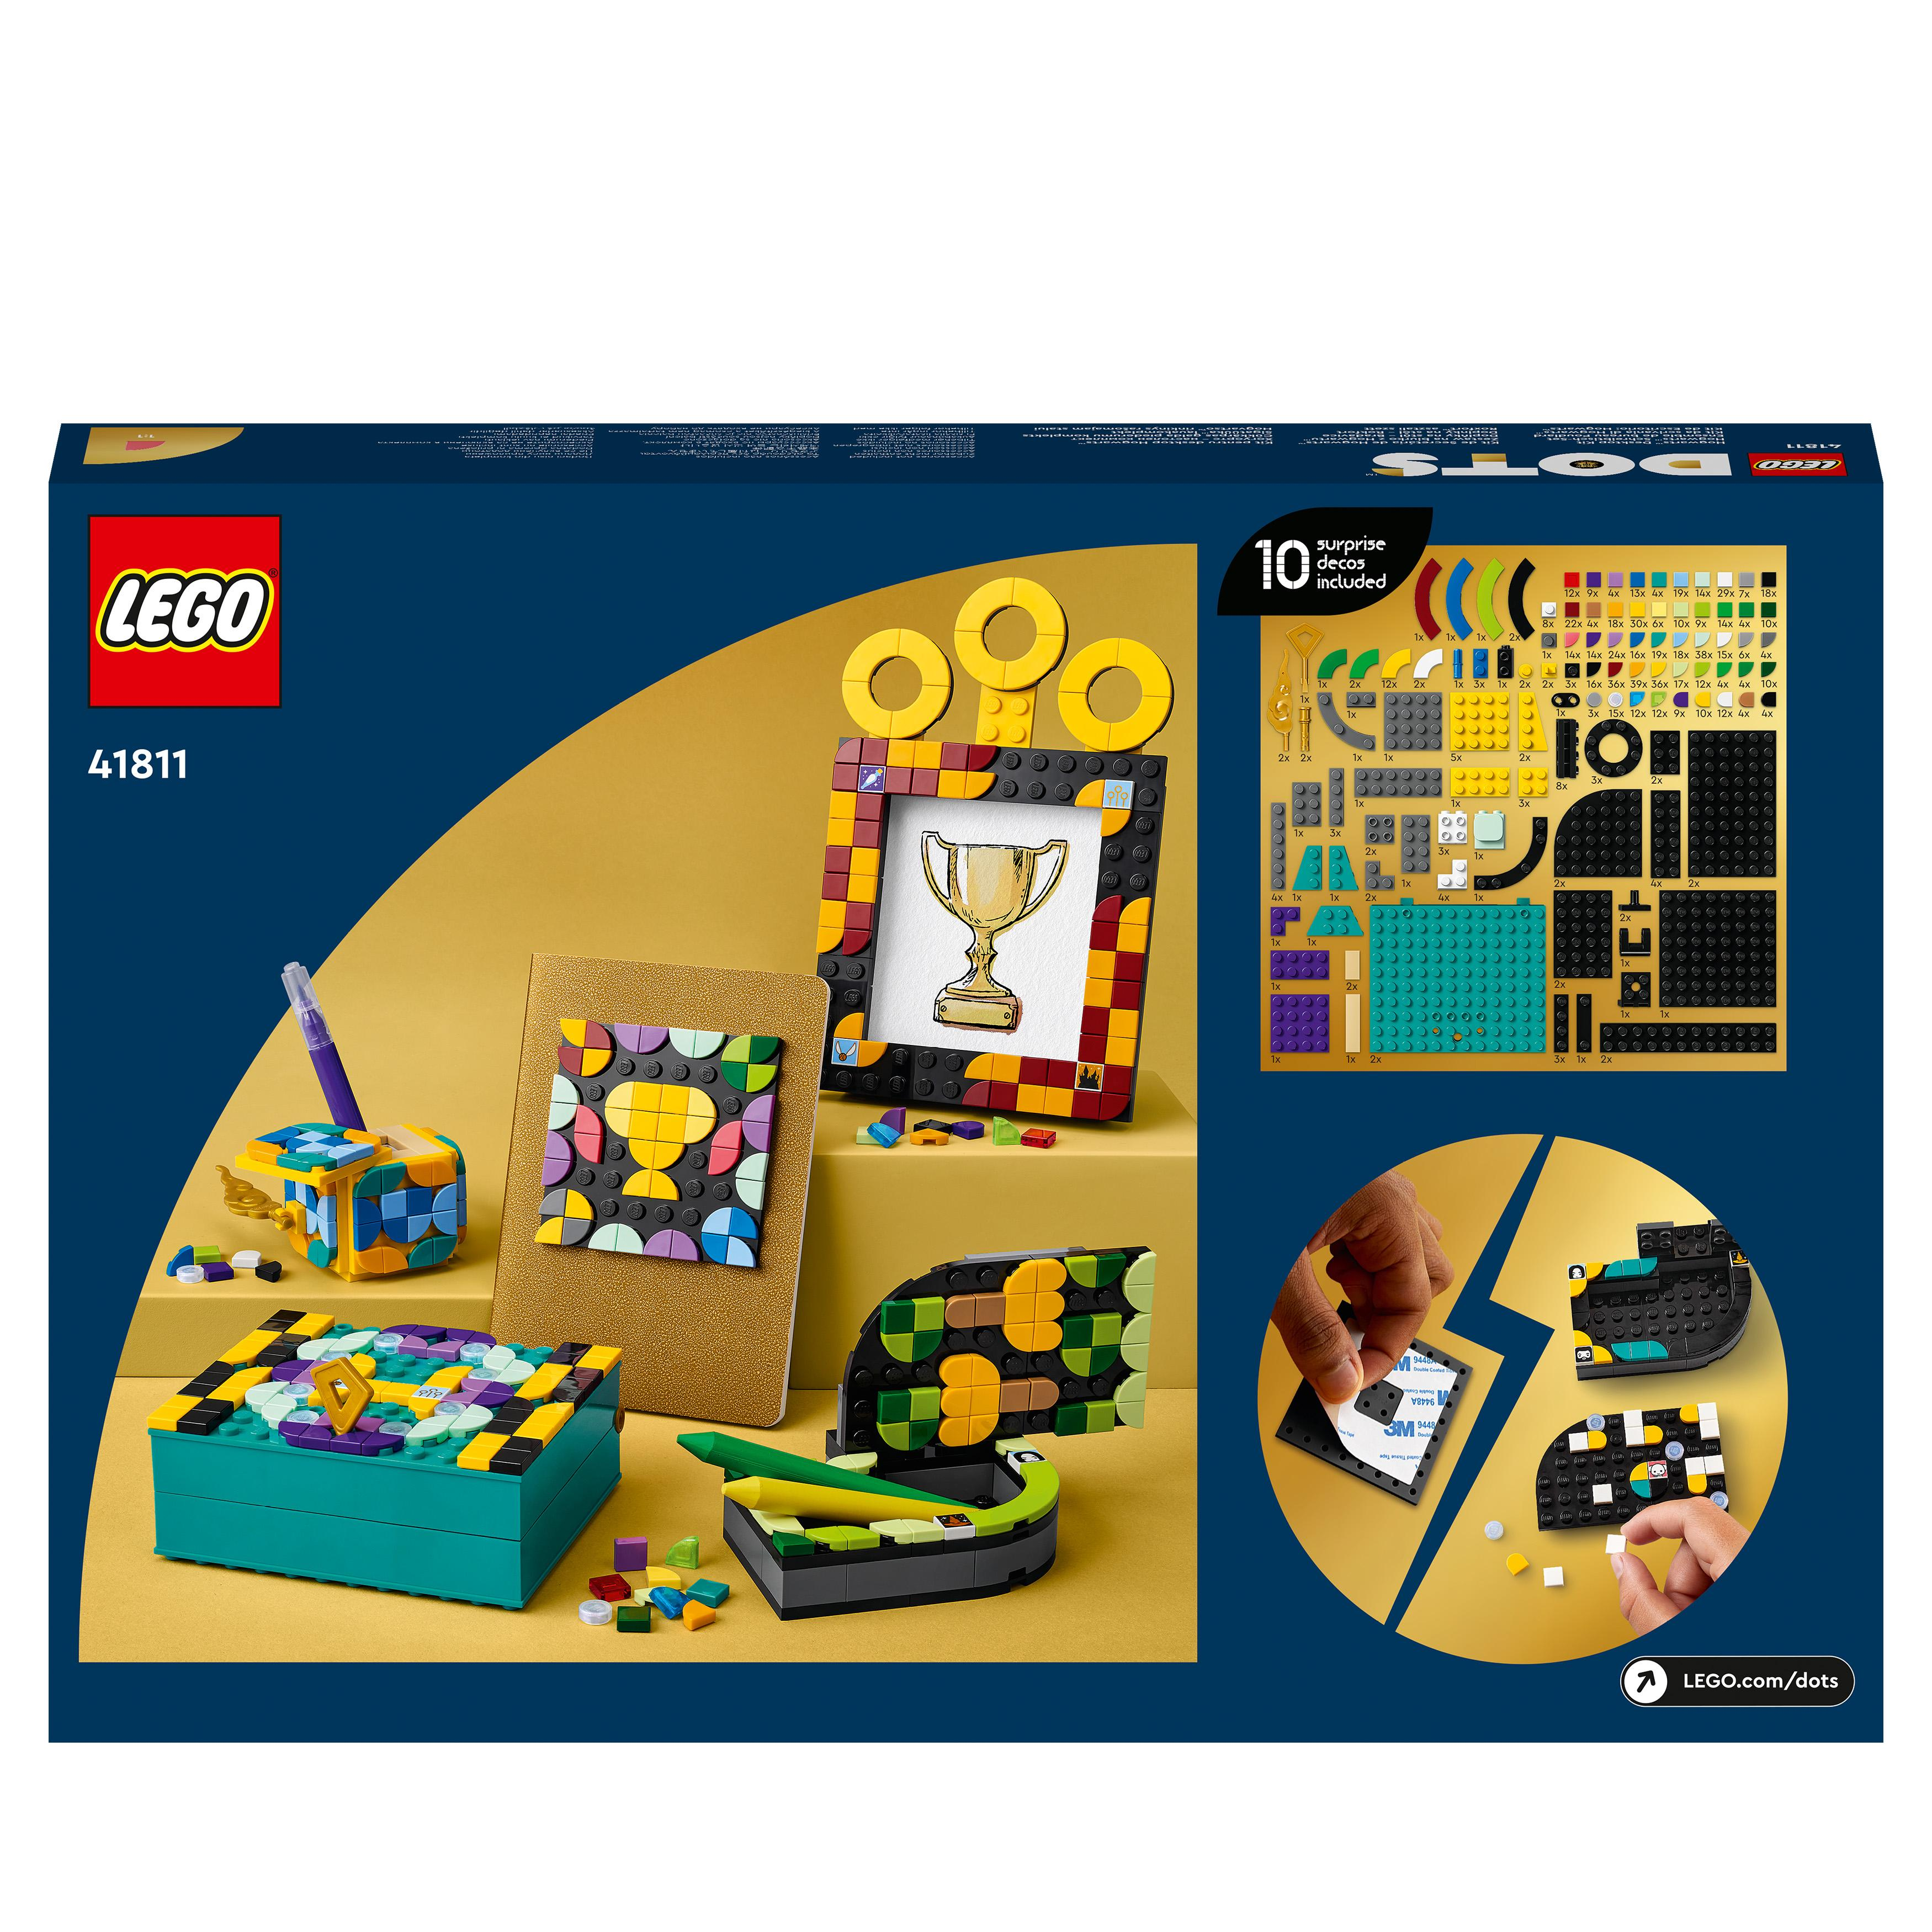 LEGO DOTS Mehrfarbig 41811 Schreibtisch-Set Hogwarts Harry Bausatz, Potter